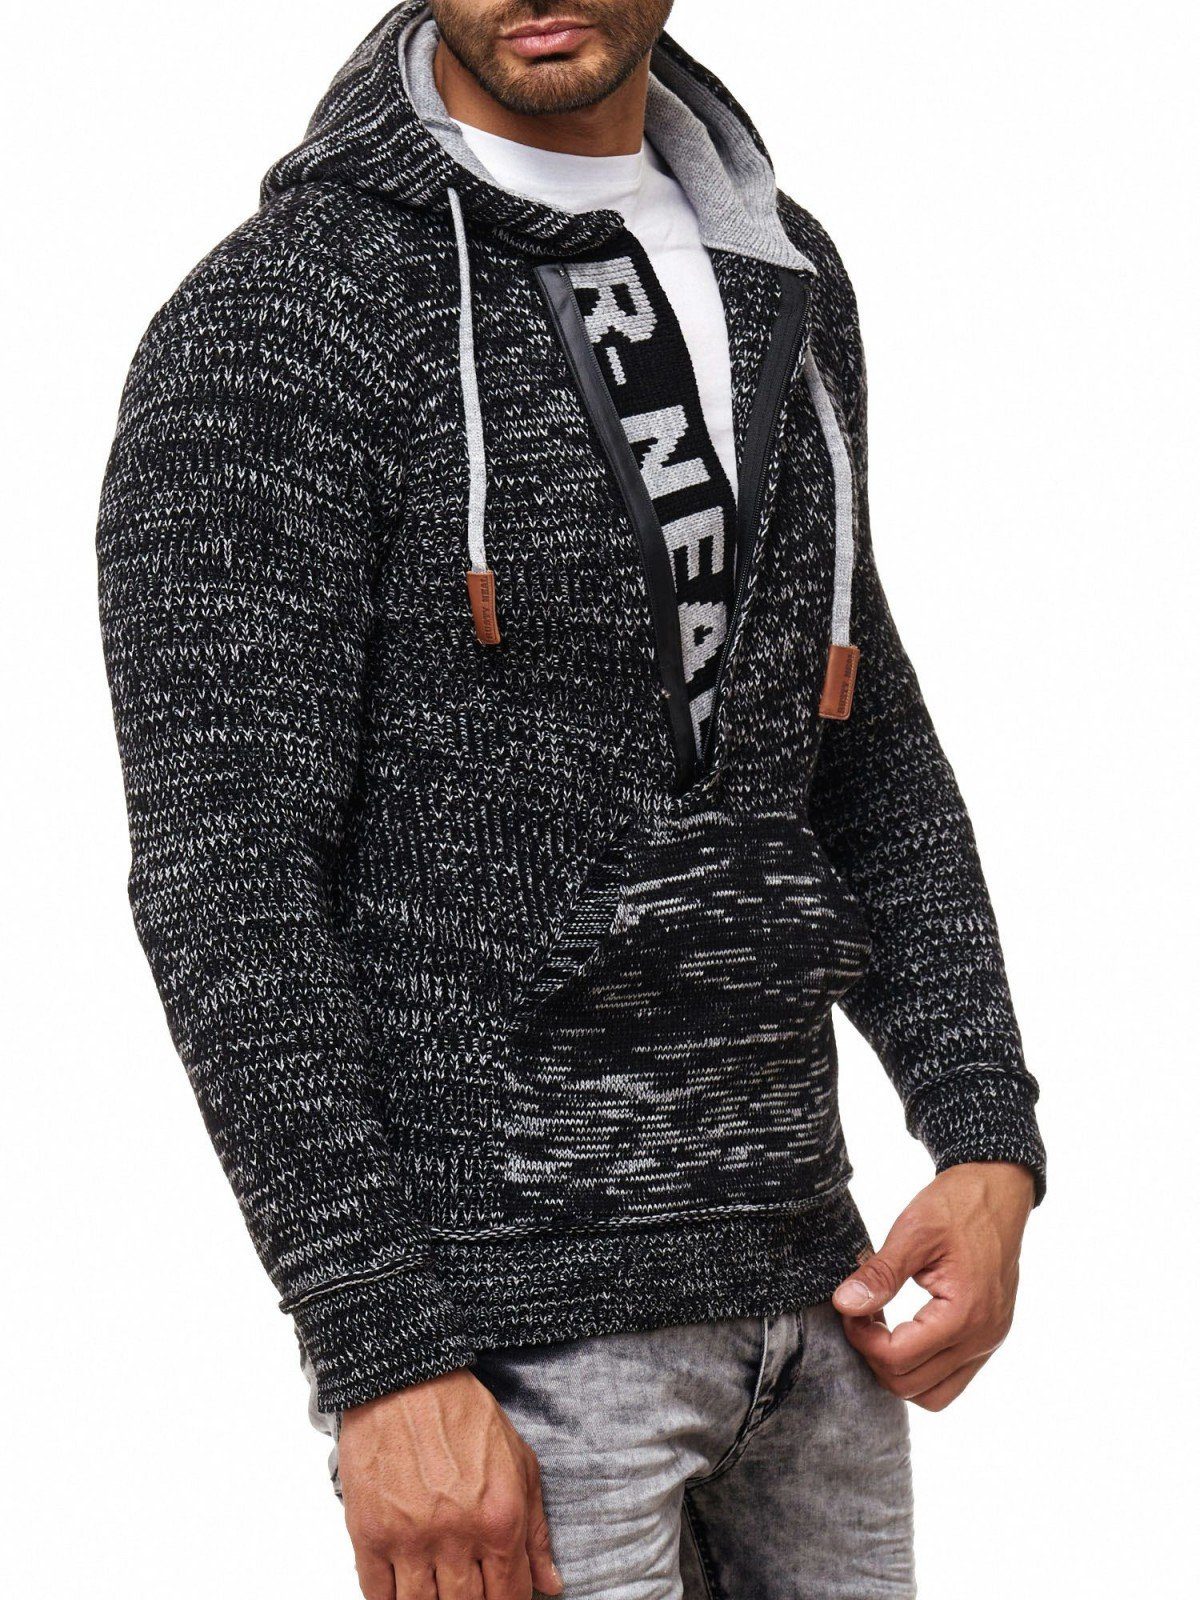 Rusty Neal Kapuzensweatshirt mit coolem Schriftzug schwarz, grau